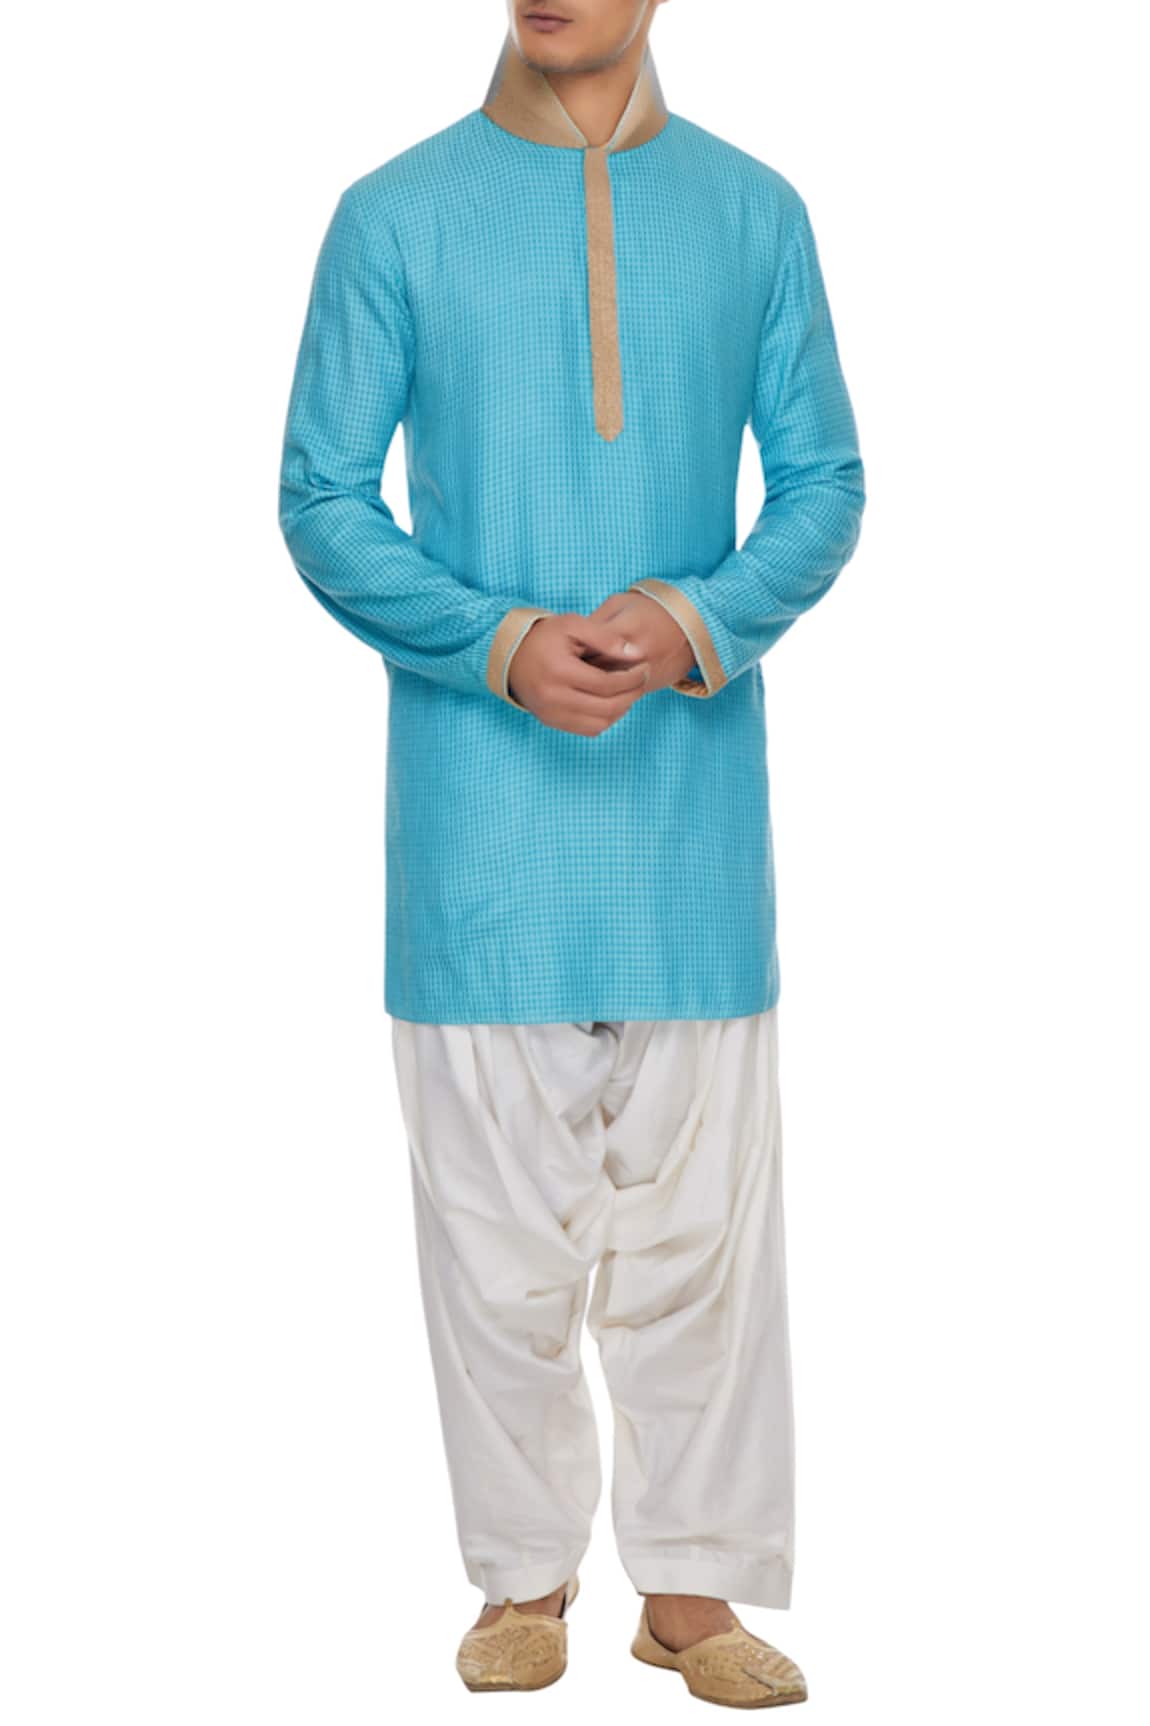 Barkha 'N' Sonzal Blue handcrafted kurta with white patiala pants